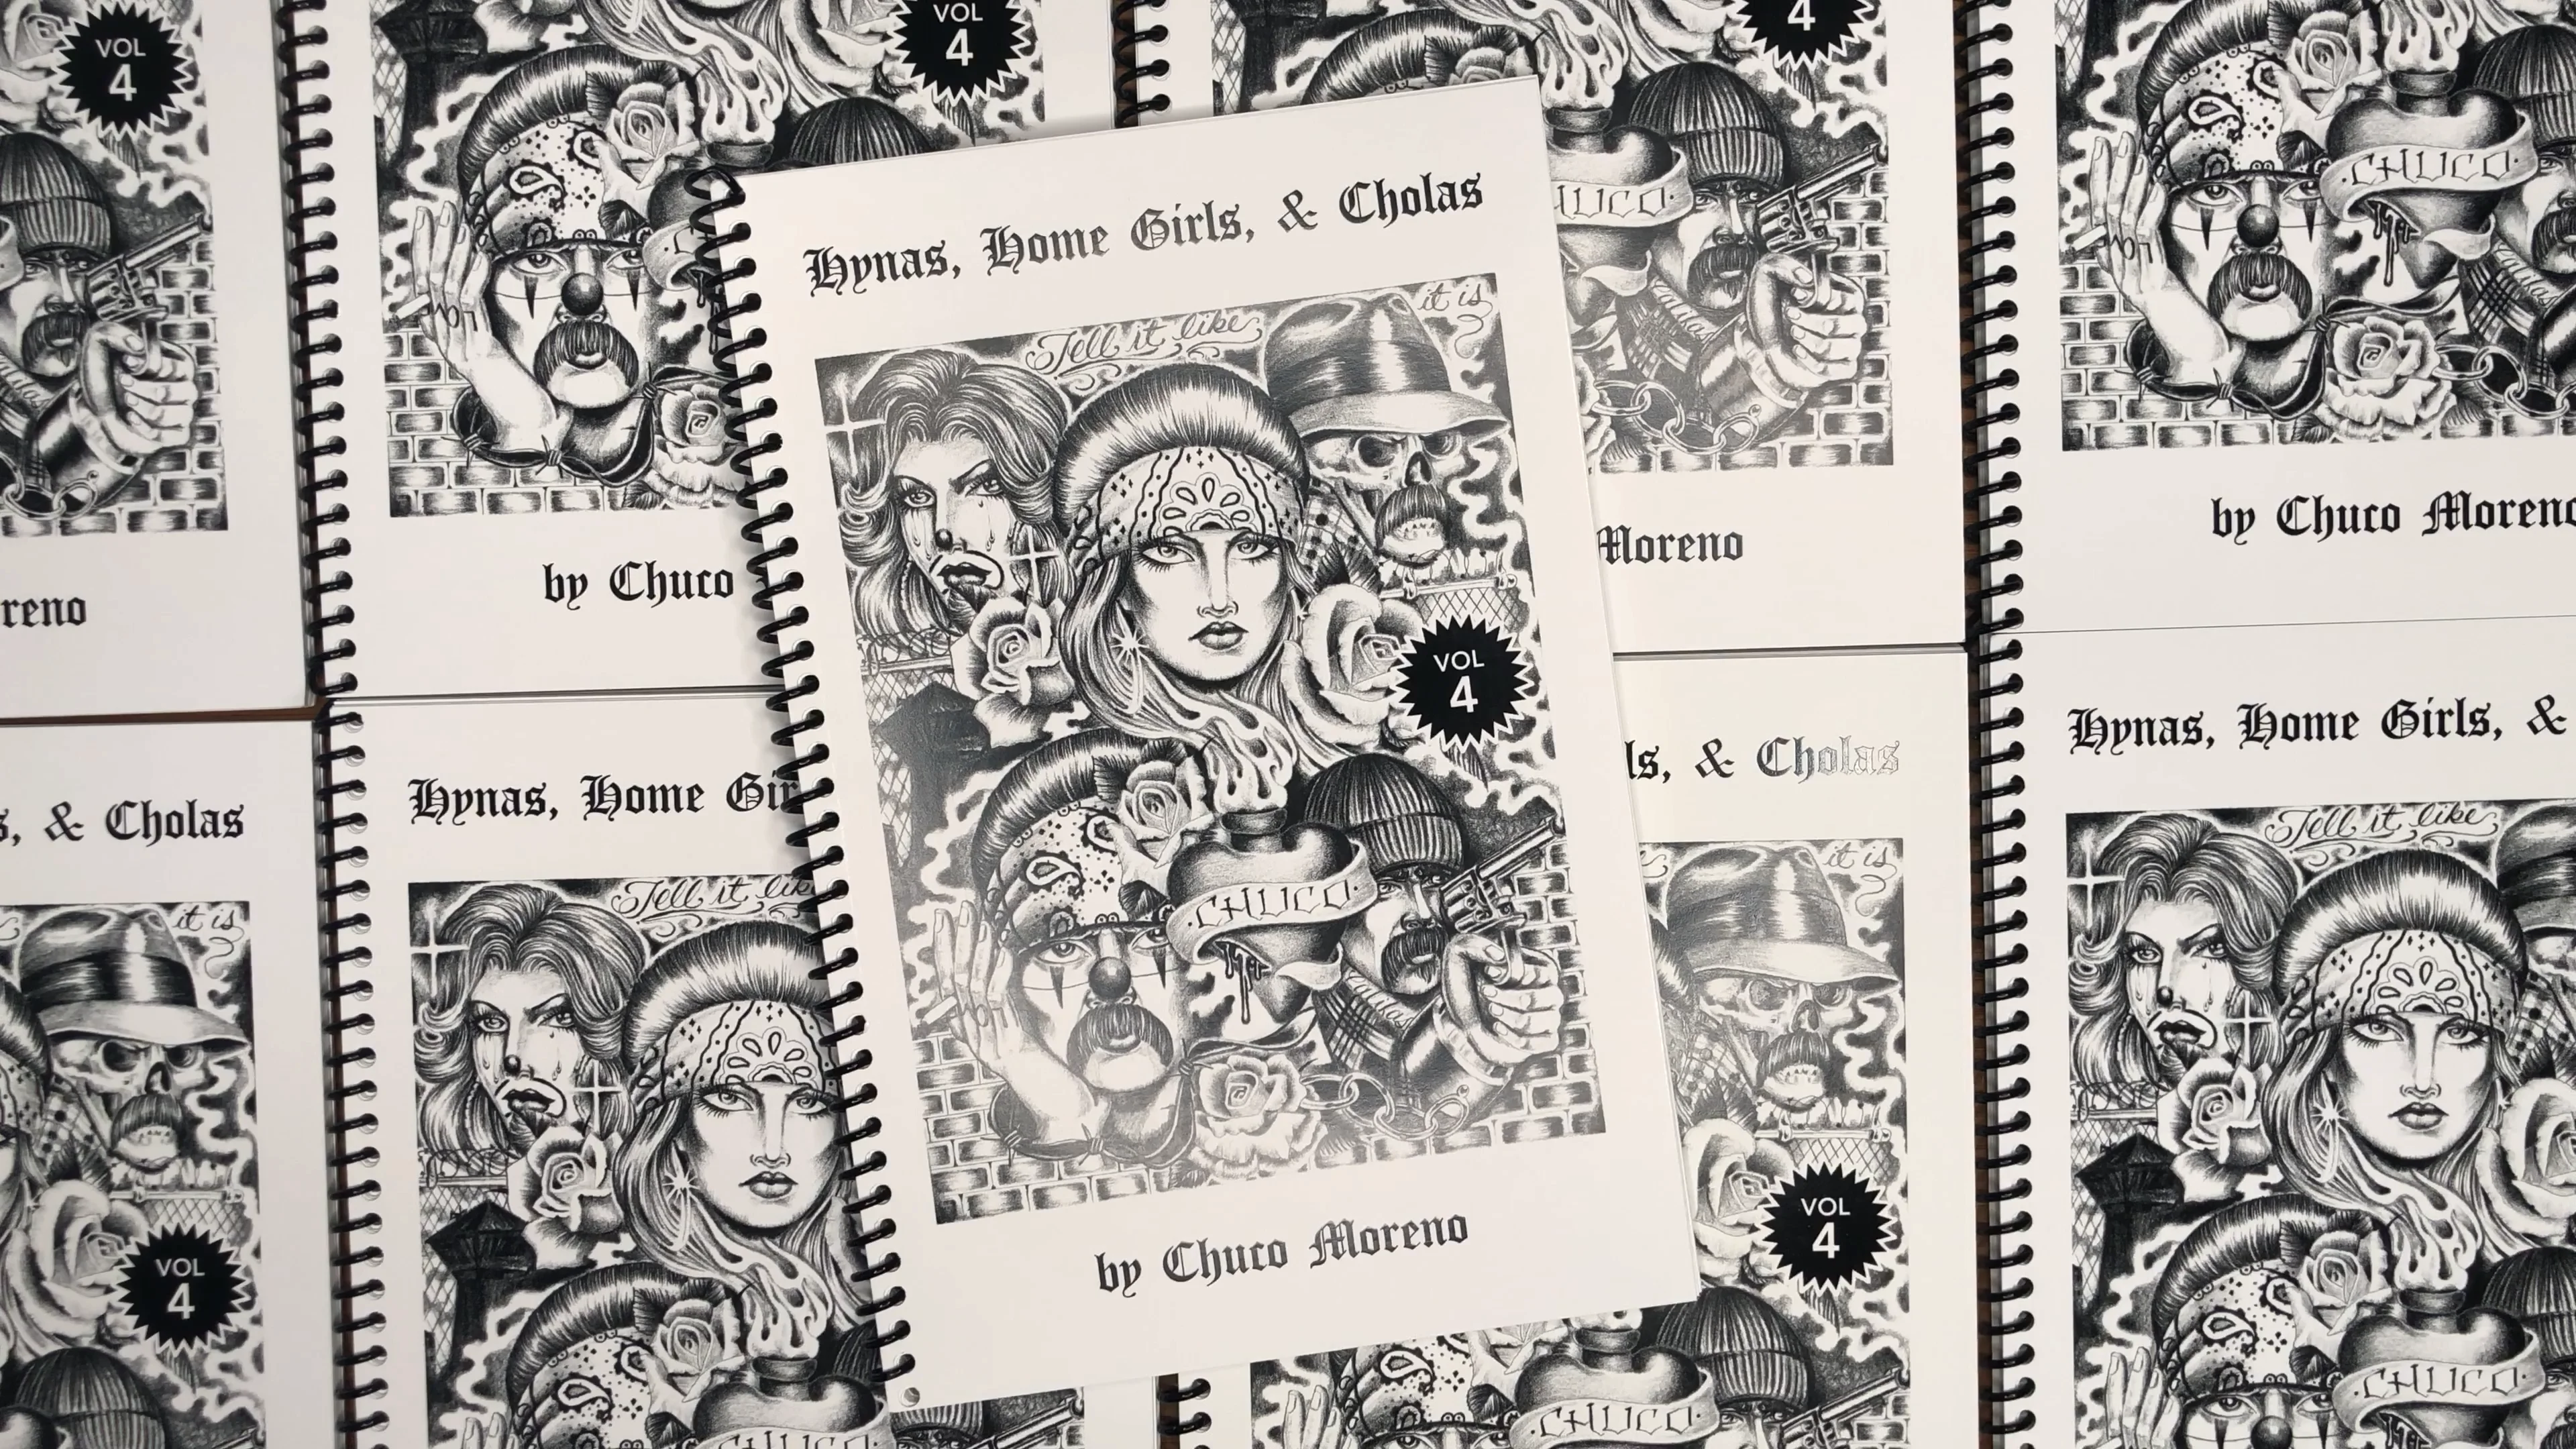 The Chuco - Sketchbook - Hynas, Home Girls & Cholas #2